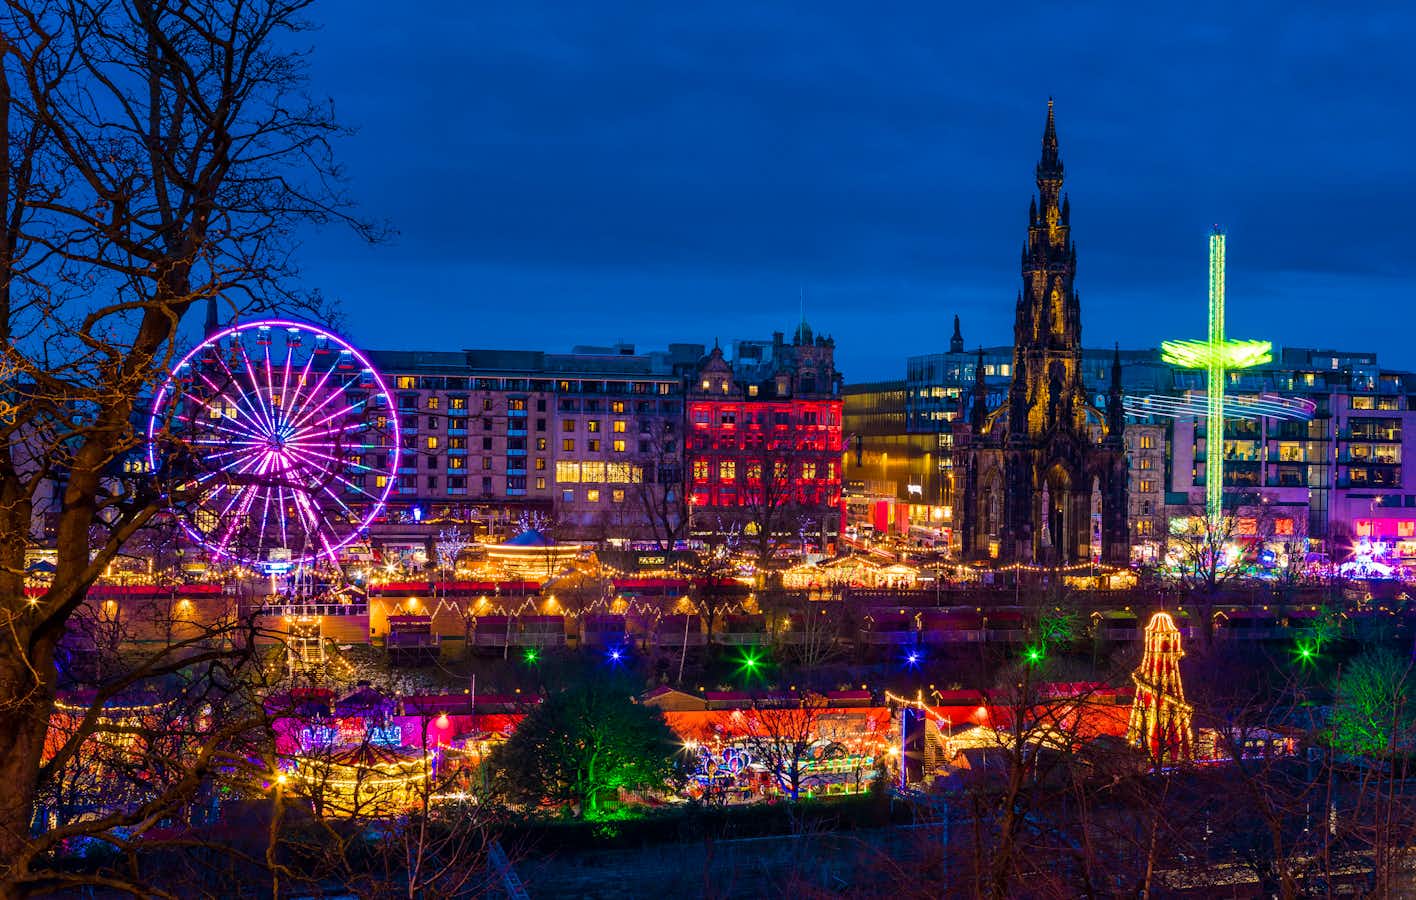 tourhub | Shearings | Turkey & Tinsel with Edinburgh and Glasgow Christmas Markets 